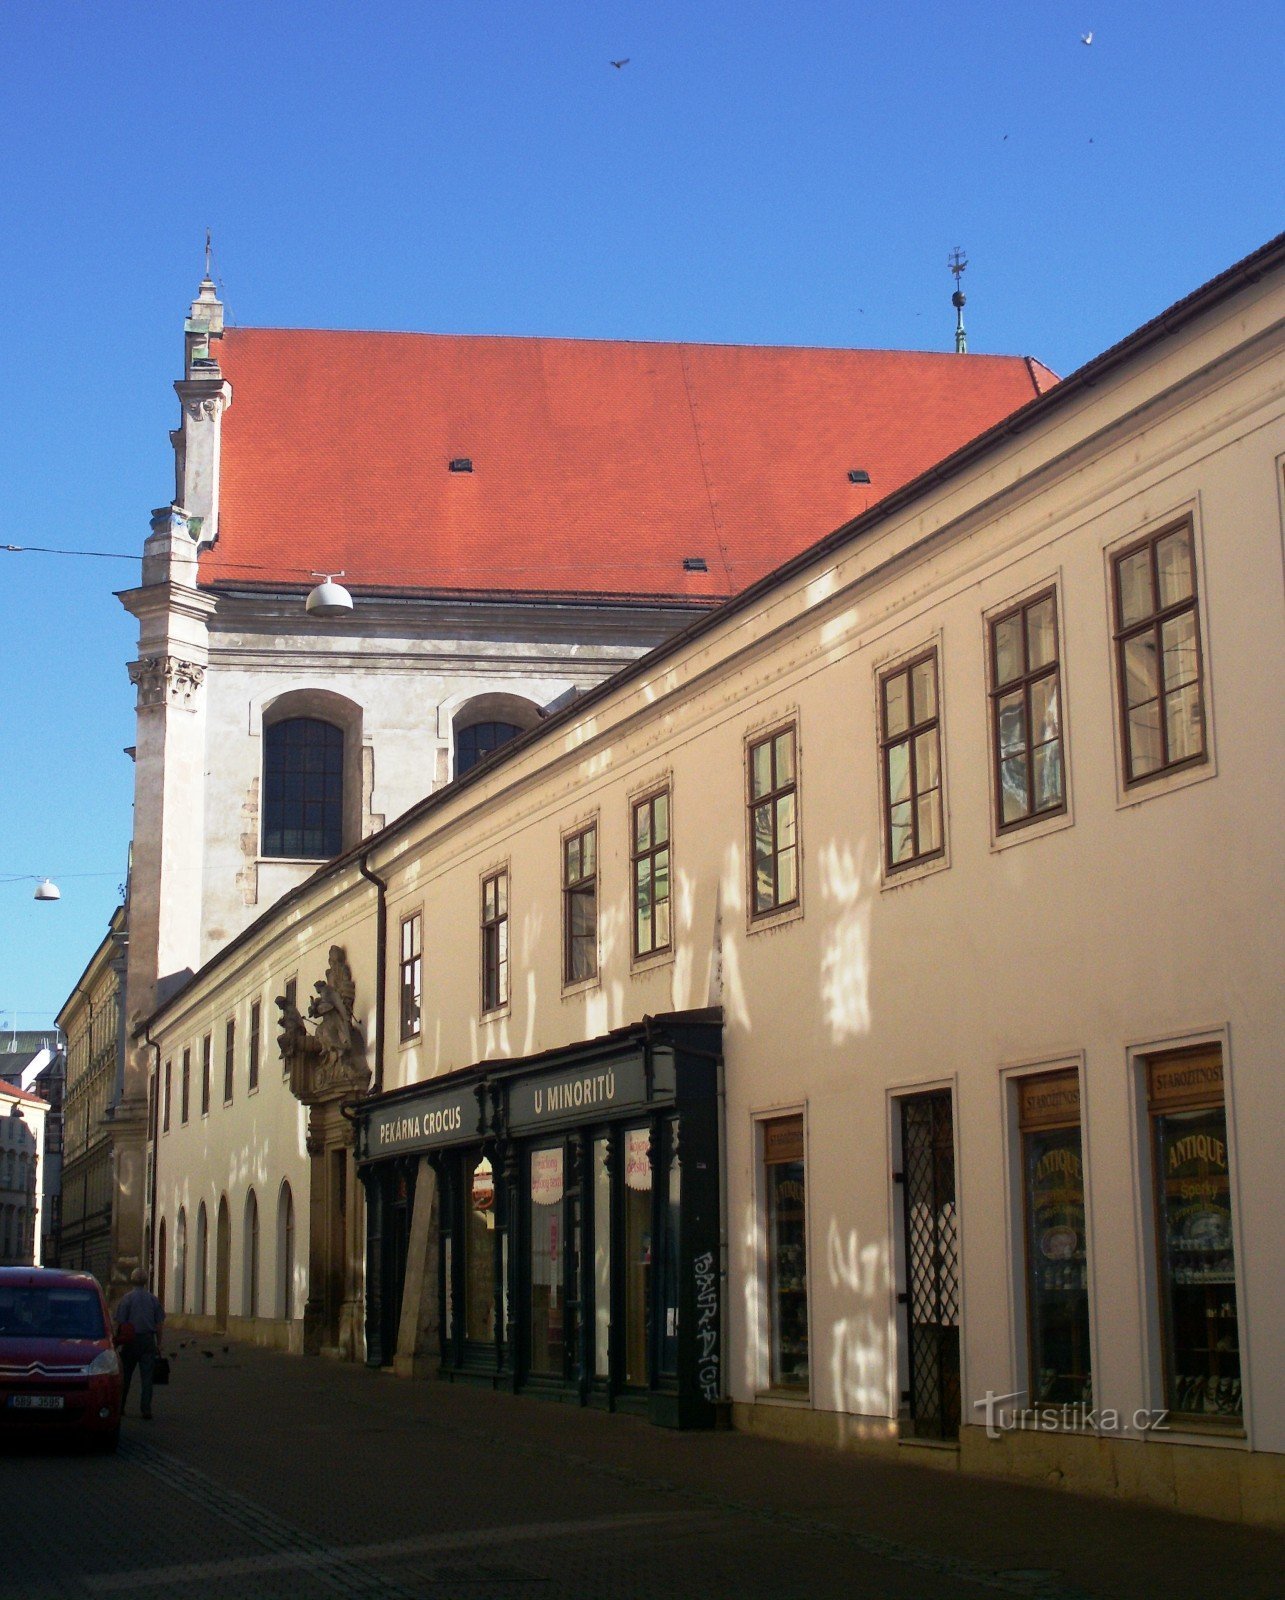 church and monastery in Minoritů street